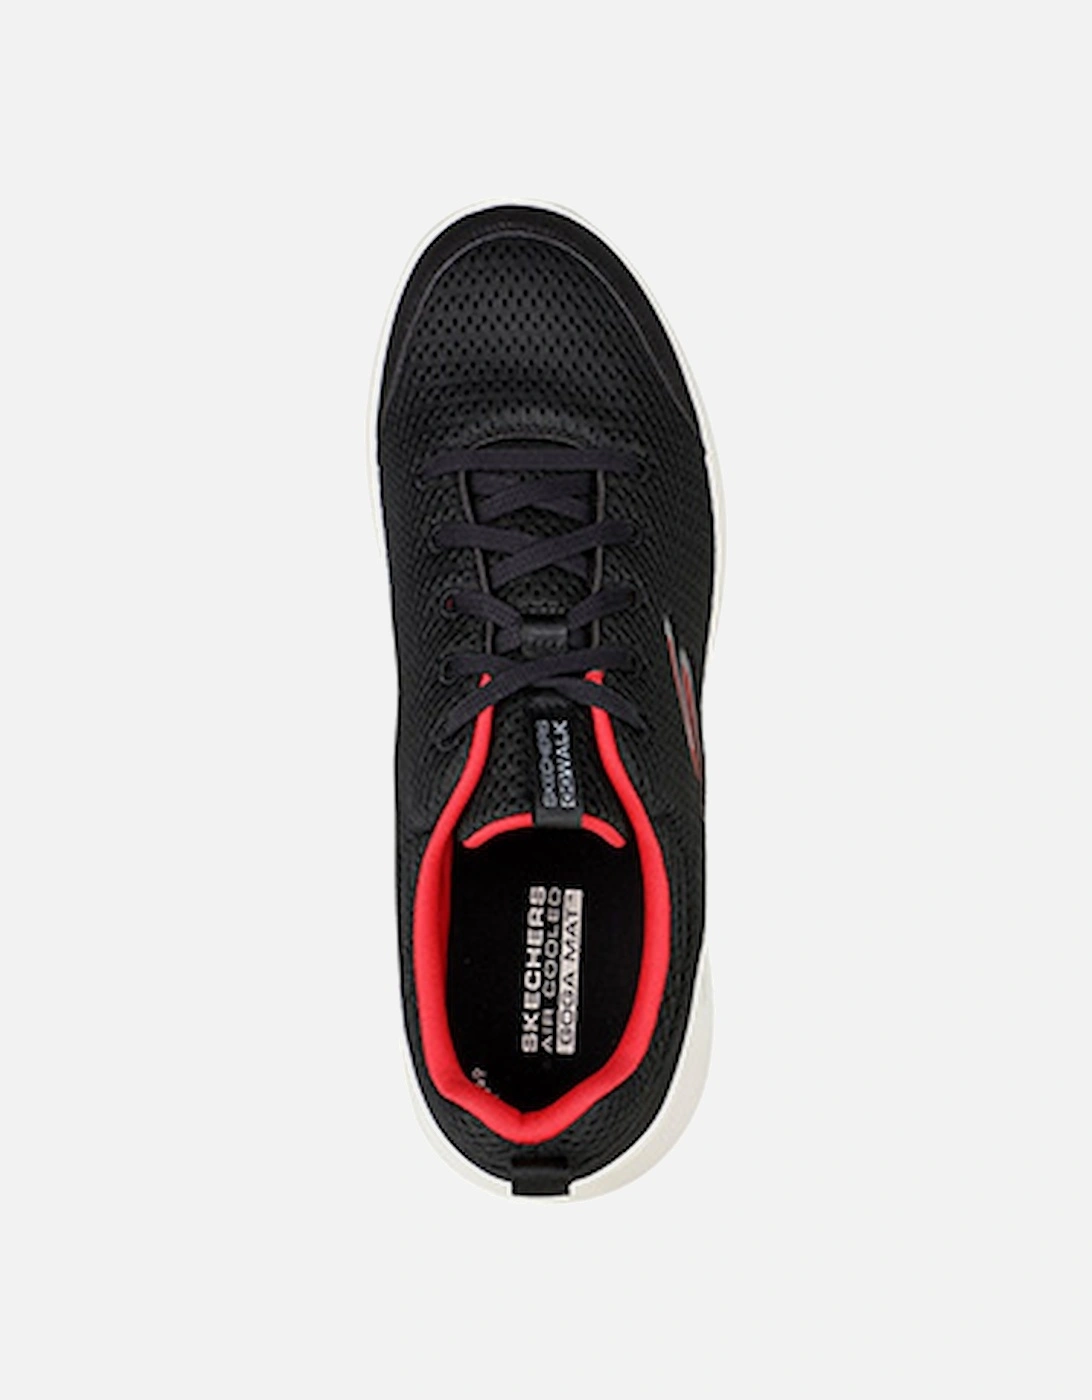 Skechers Men's GOWalk Max Progressor Sports Shoe Black/Red